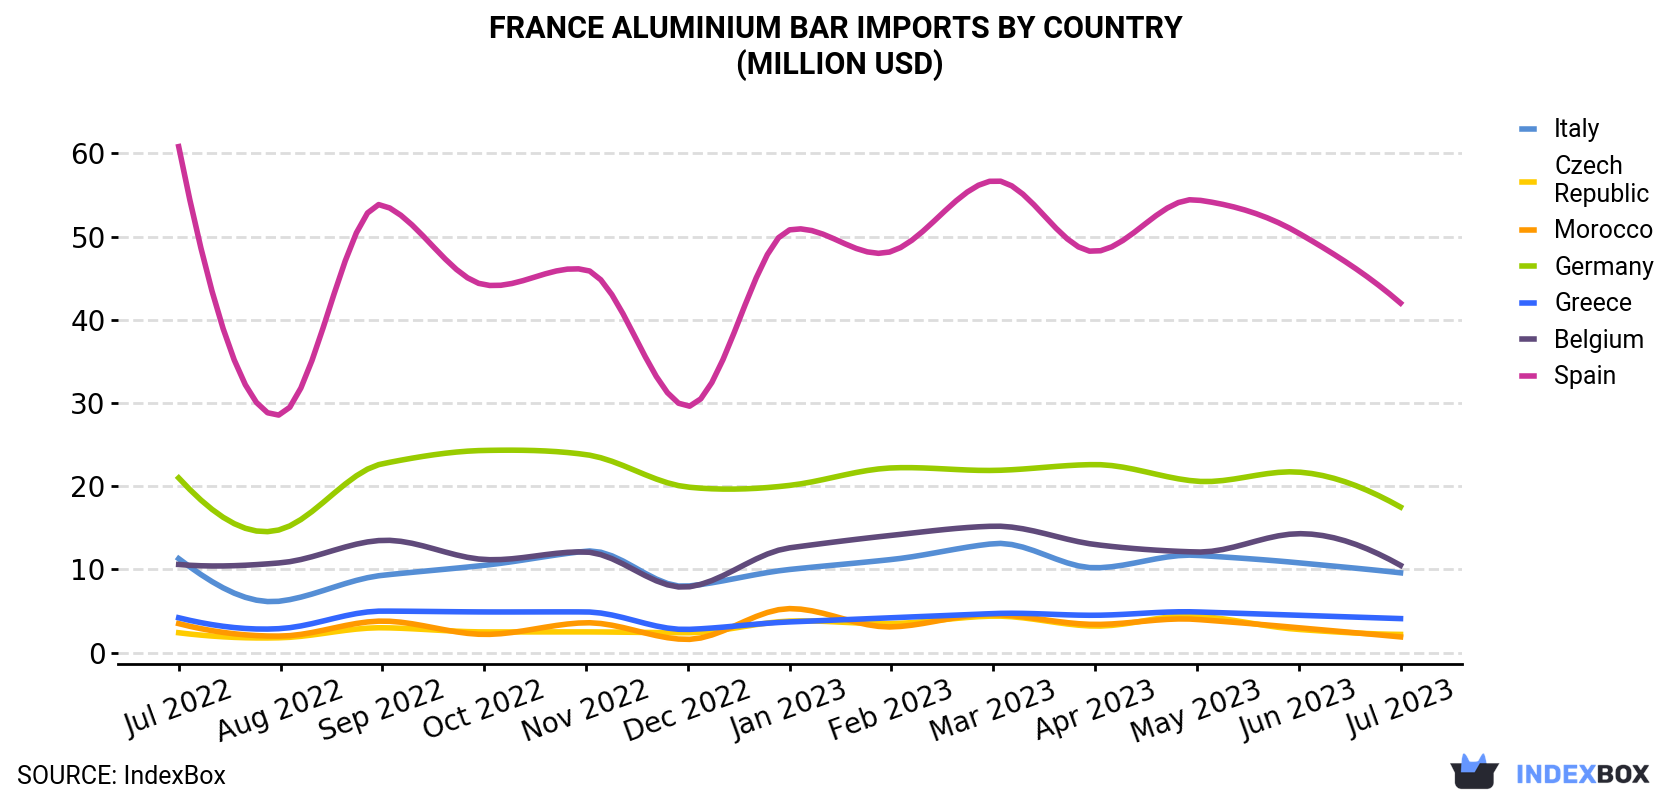 France Aluminium Bar Imports By Country (Million USD)